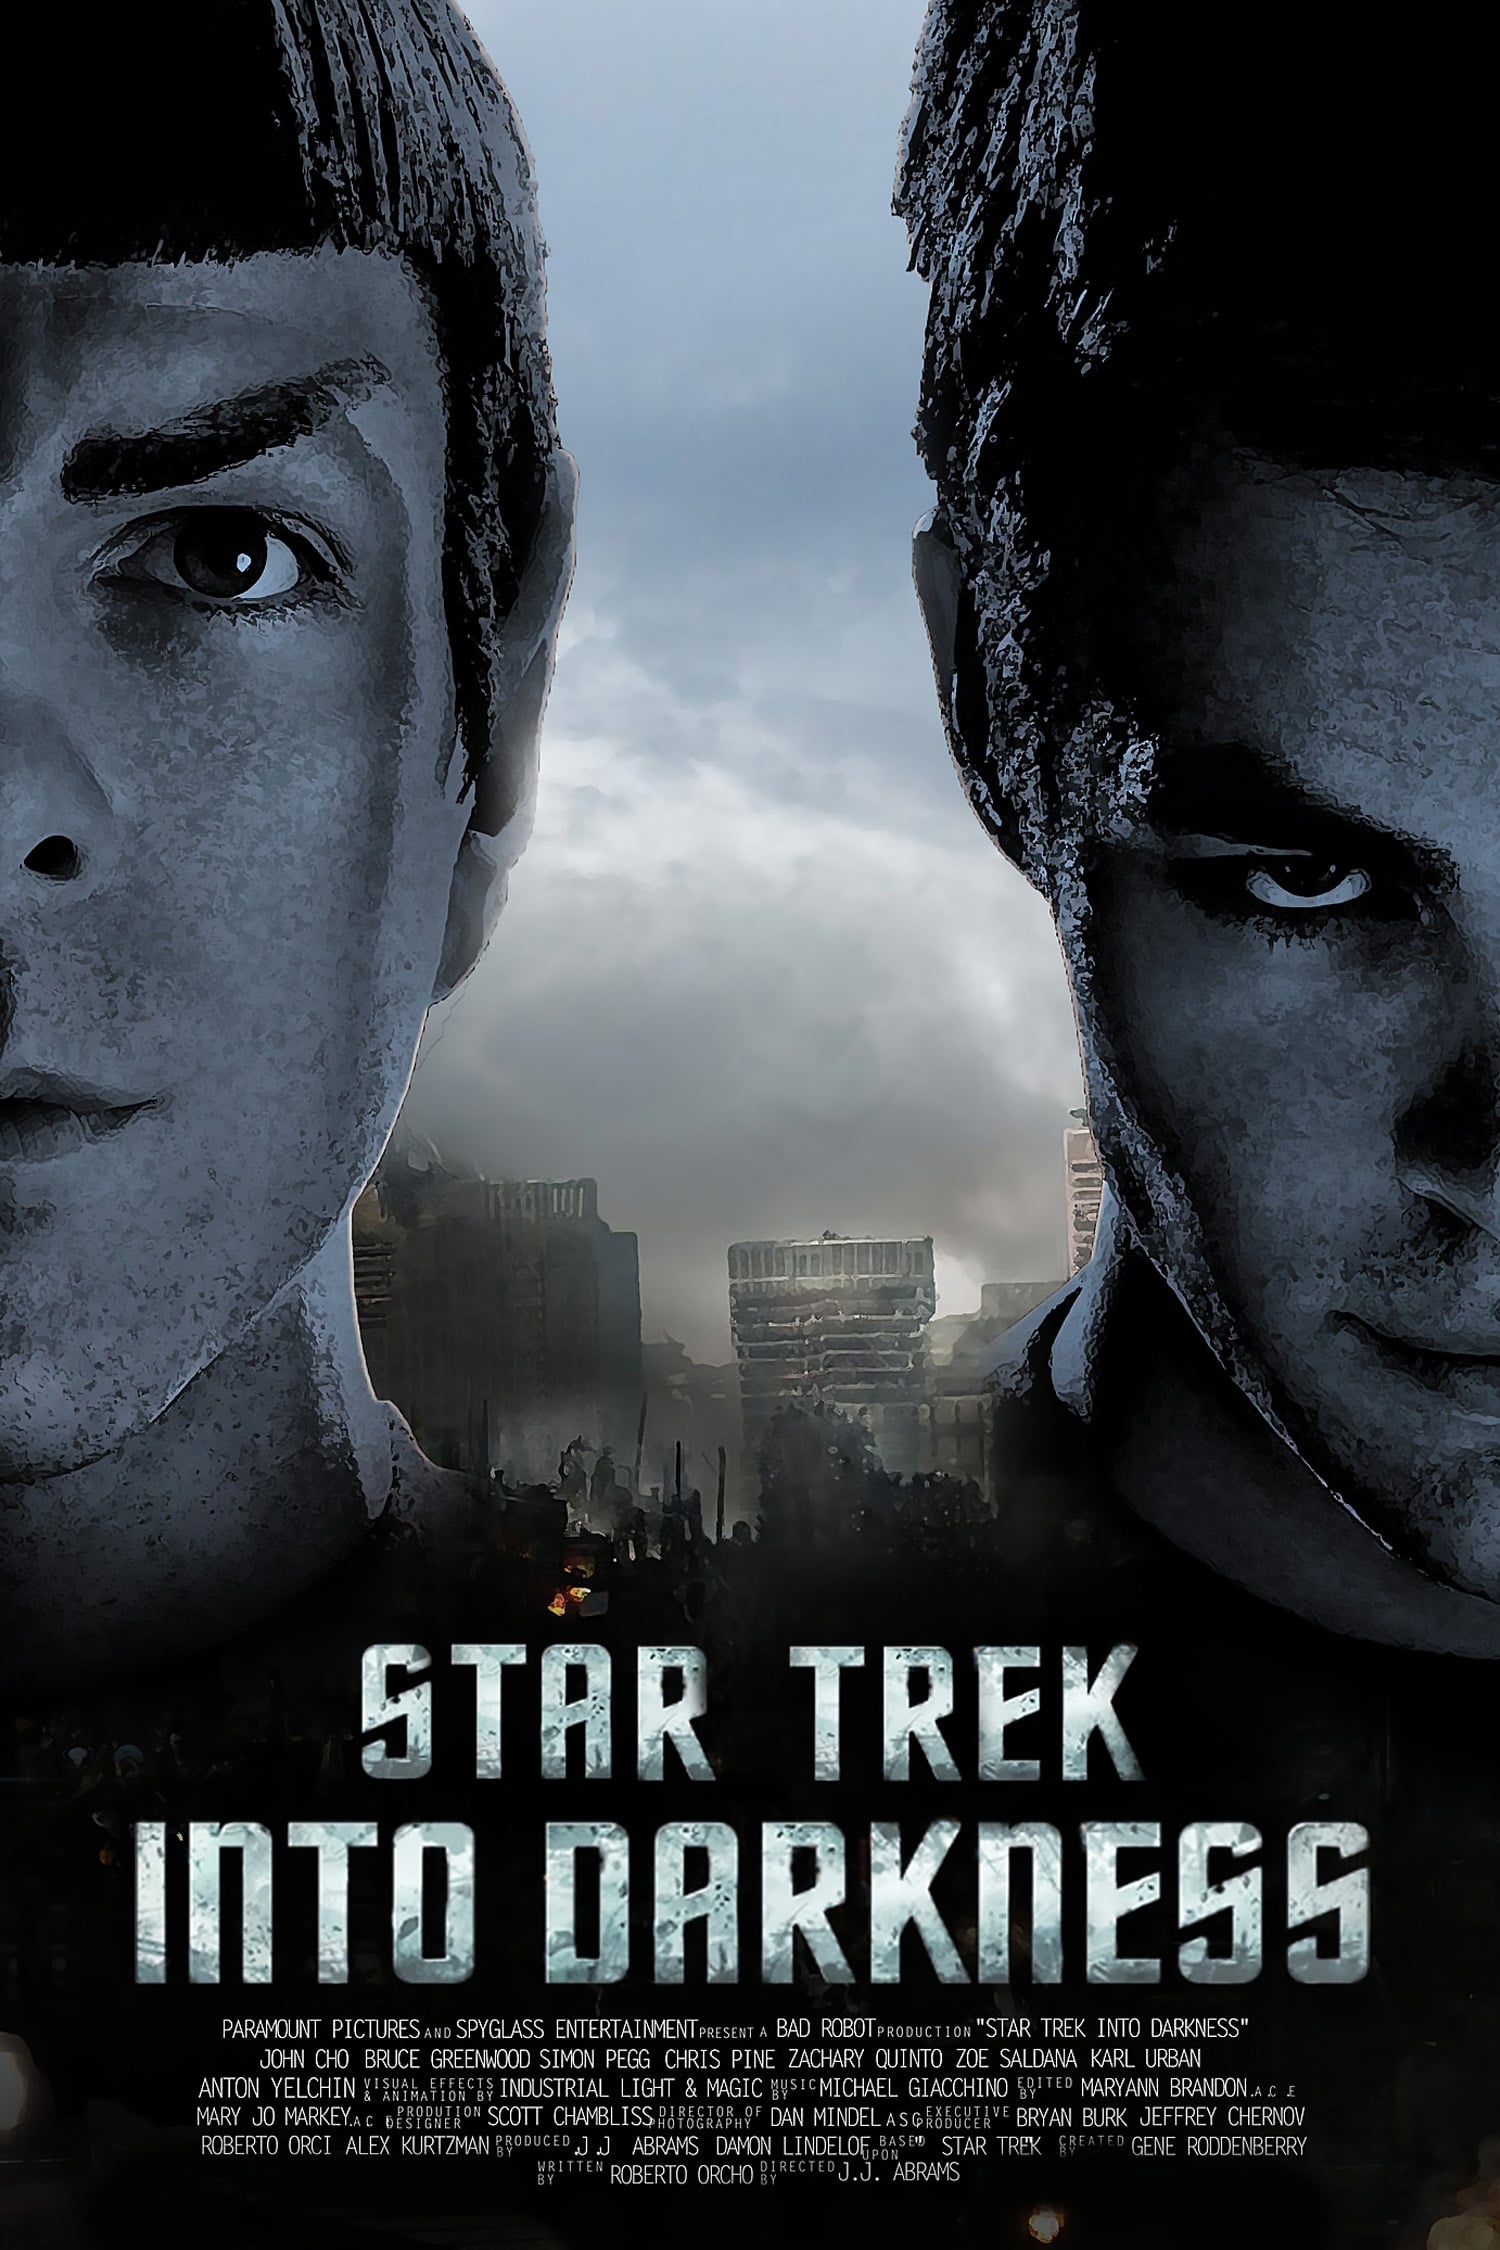 star trek official movie poster